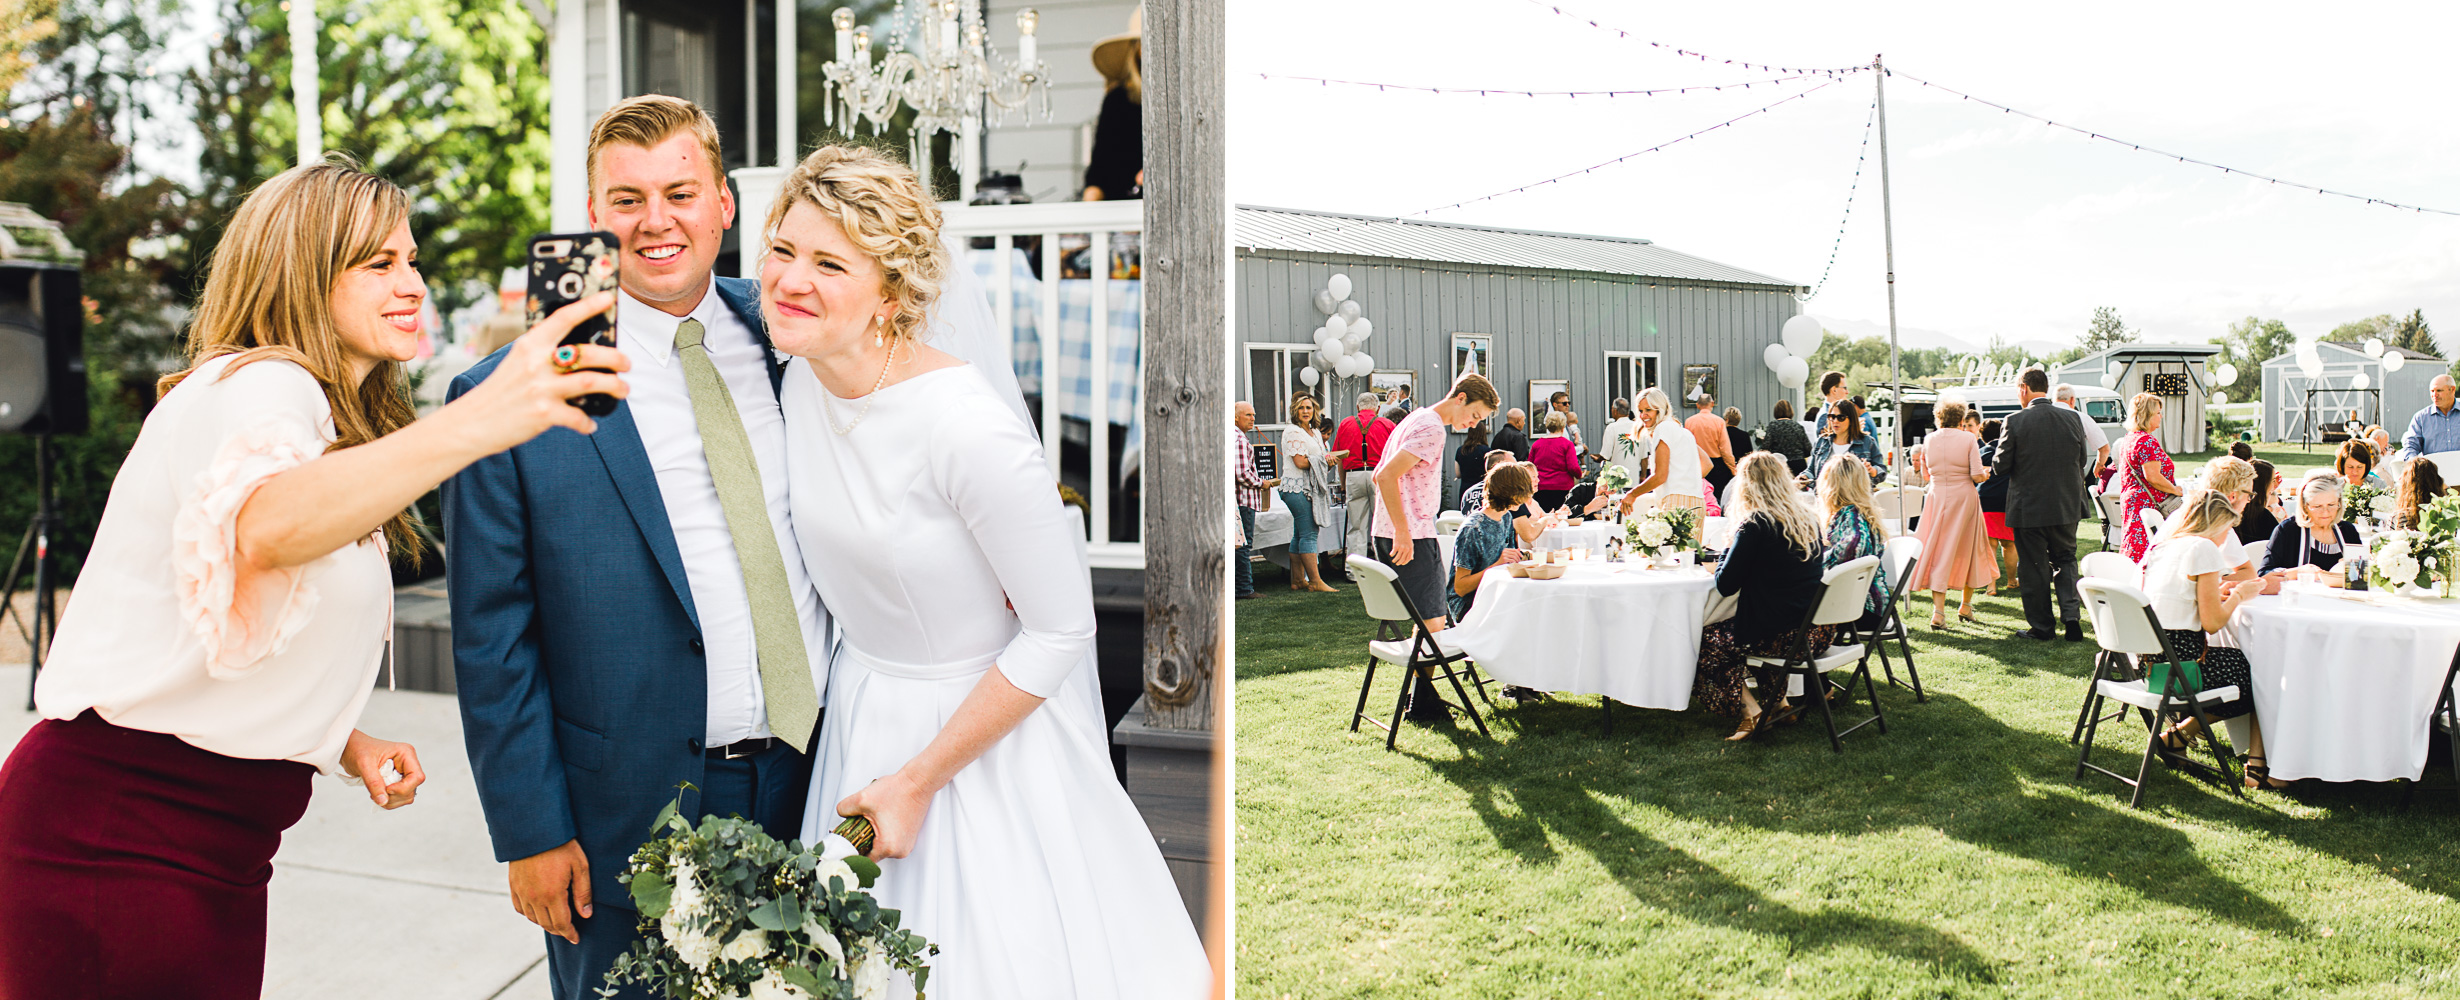 beautiful-outdoor-backyard-wedding-reception-anna-christine-photography-rexburg-idaho-9.jpg